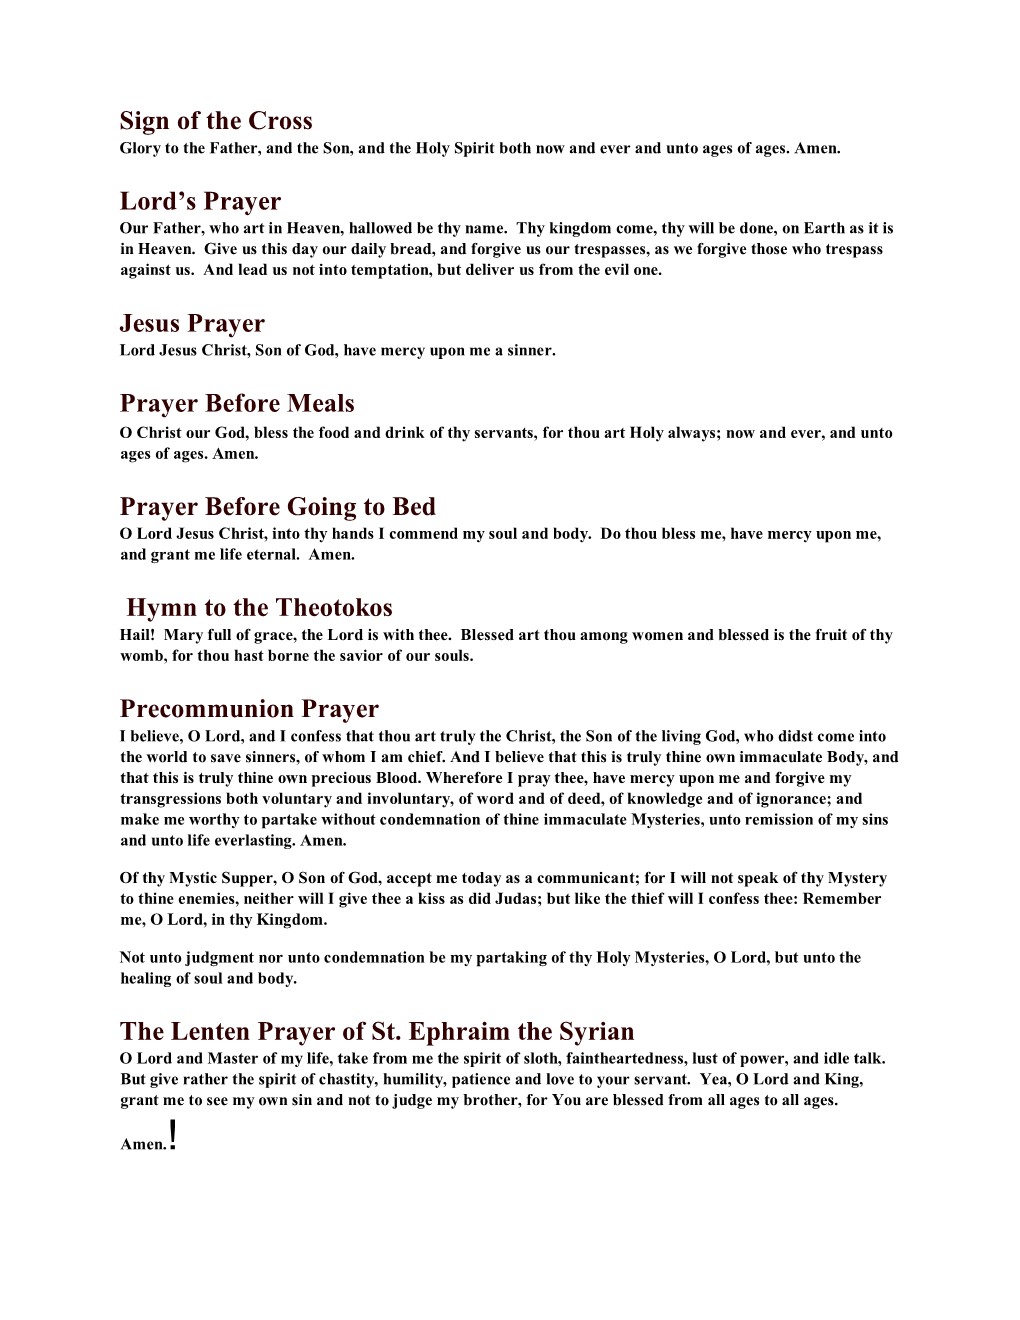 Sign of the Cross Lord's Prayer Jesus Prayer Prayer Before Meals